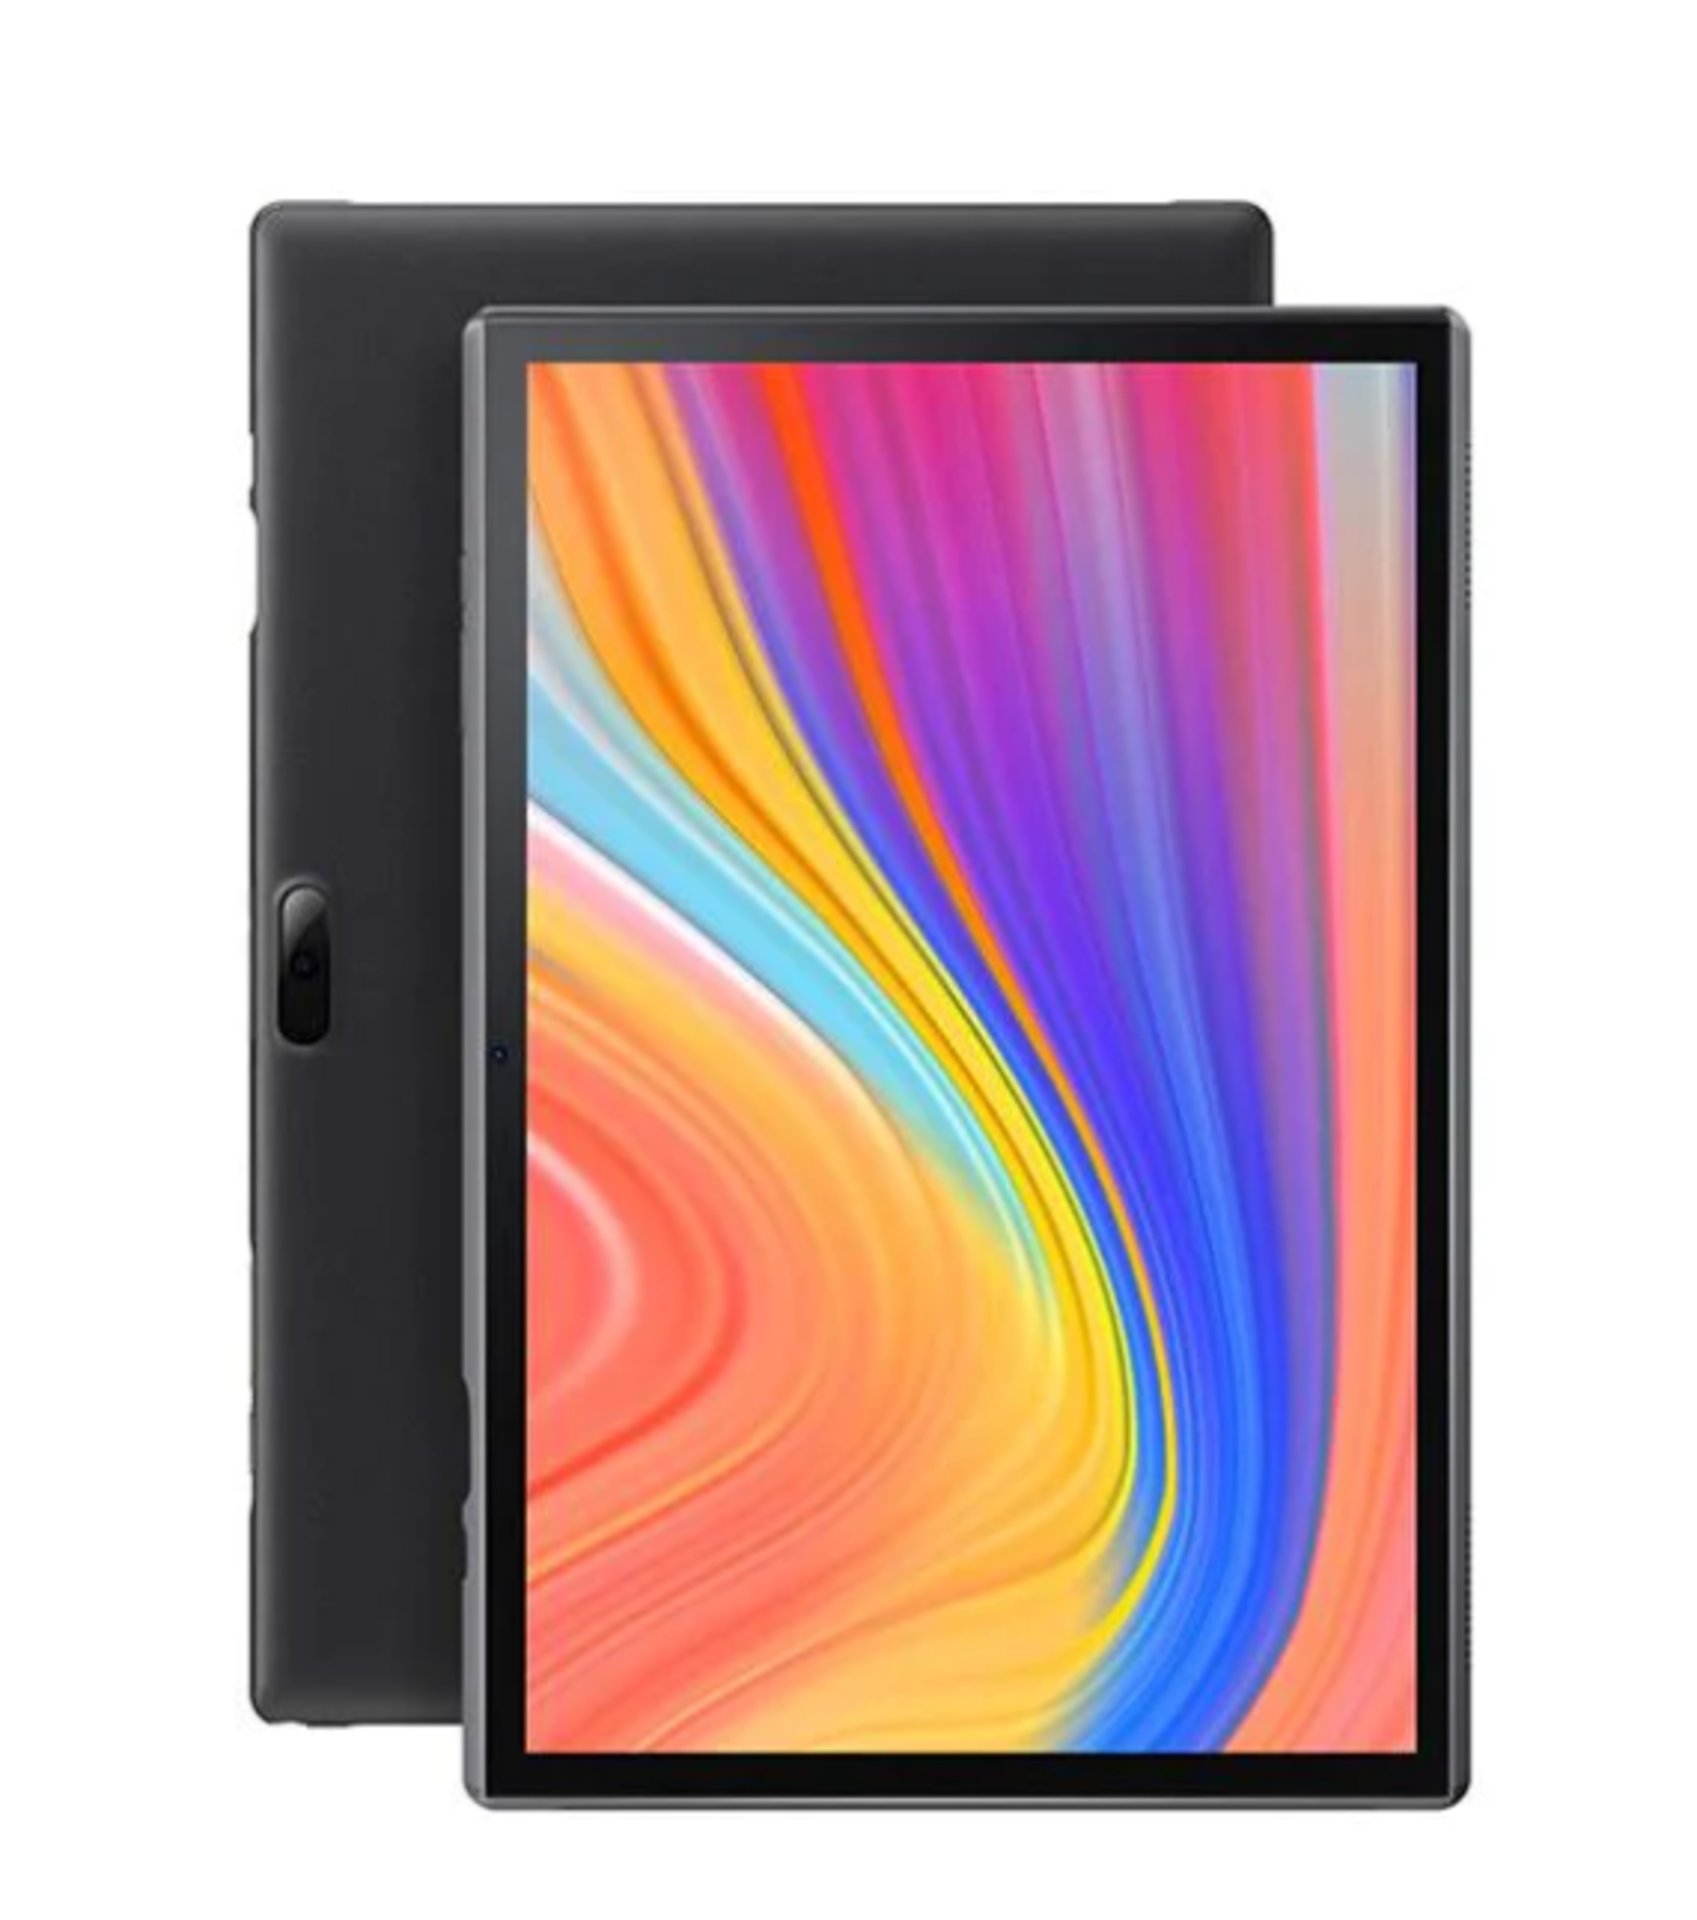 5 x New Boxed VANKYO MatrixPad S10 10 inch Android Tablet, Quad-Core Processor, IPS HD Display,